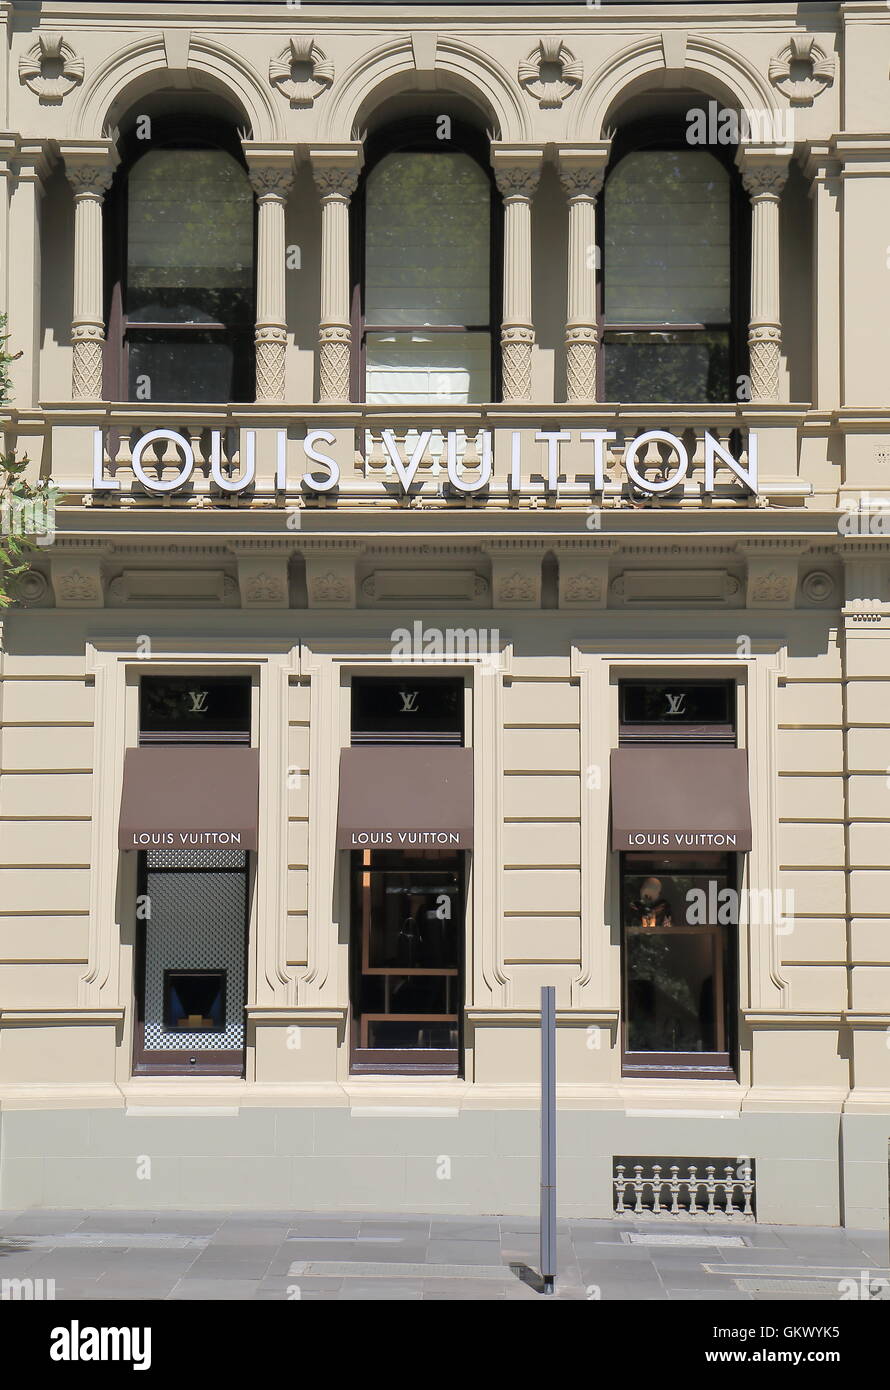 Louis Vuitton Melbourne Collins Street Store in Melbourne, AUSTRALIA